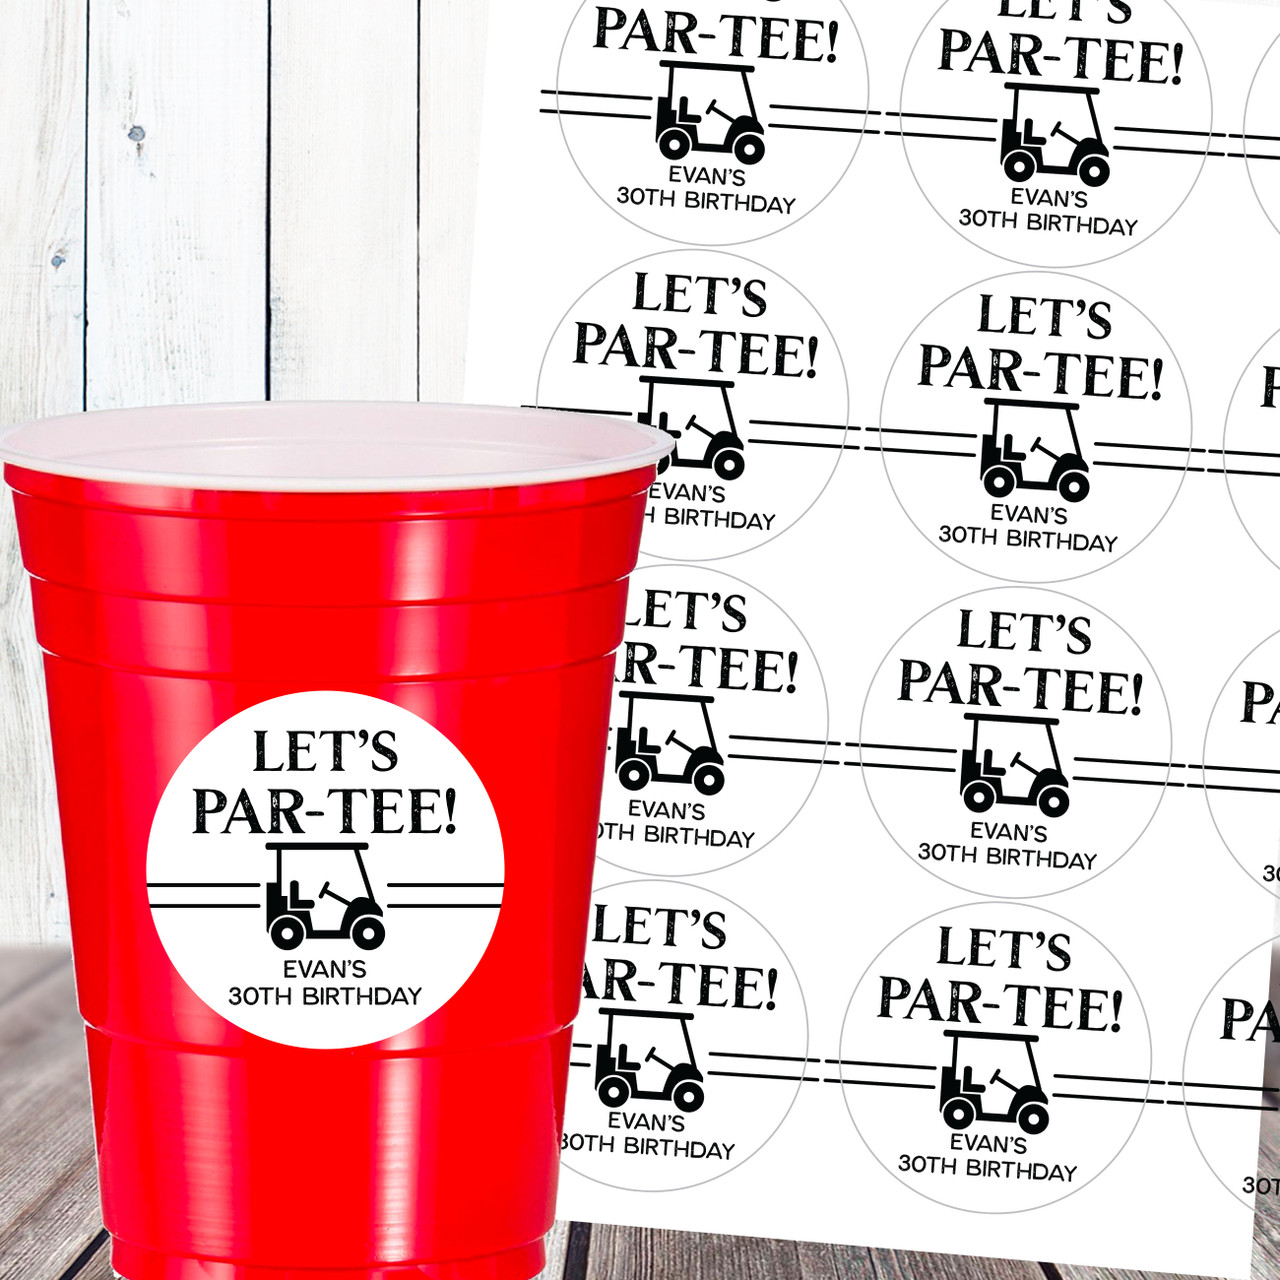 Golf Par-Tee Custom Party Favor Labels - Plastic Cup Stickers